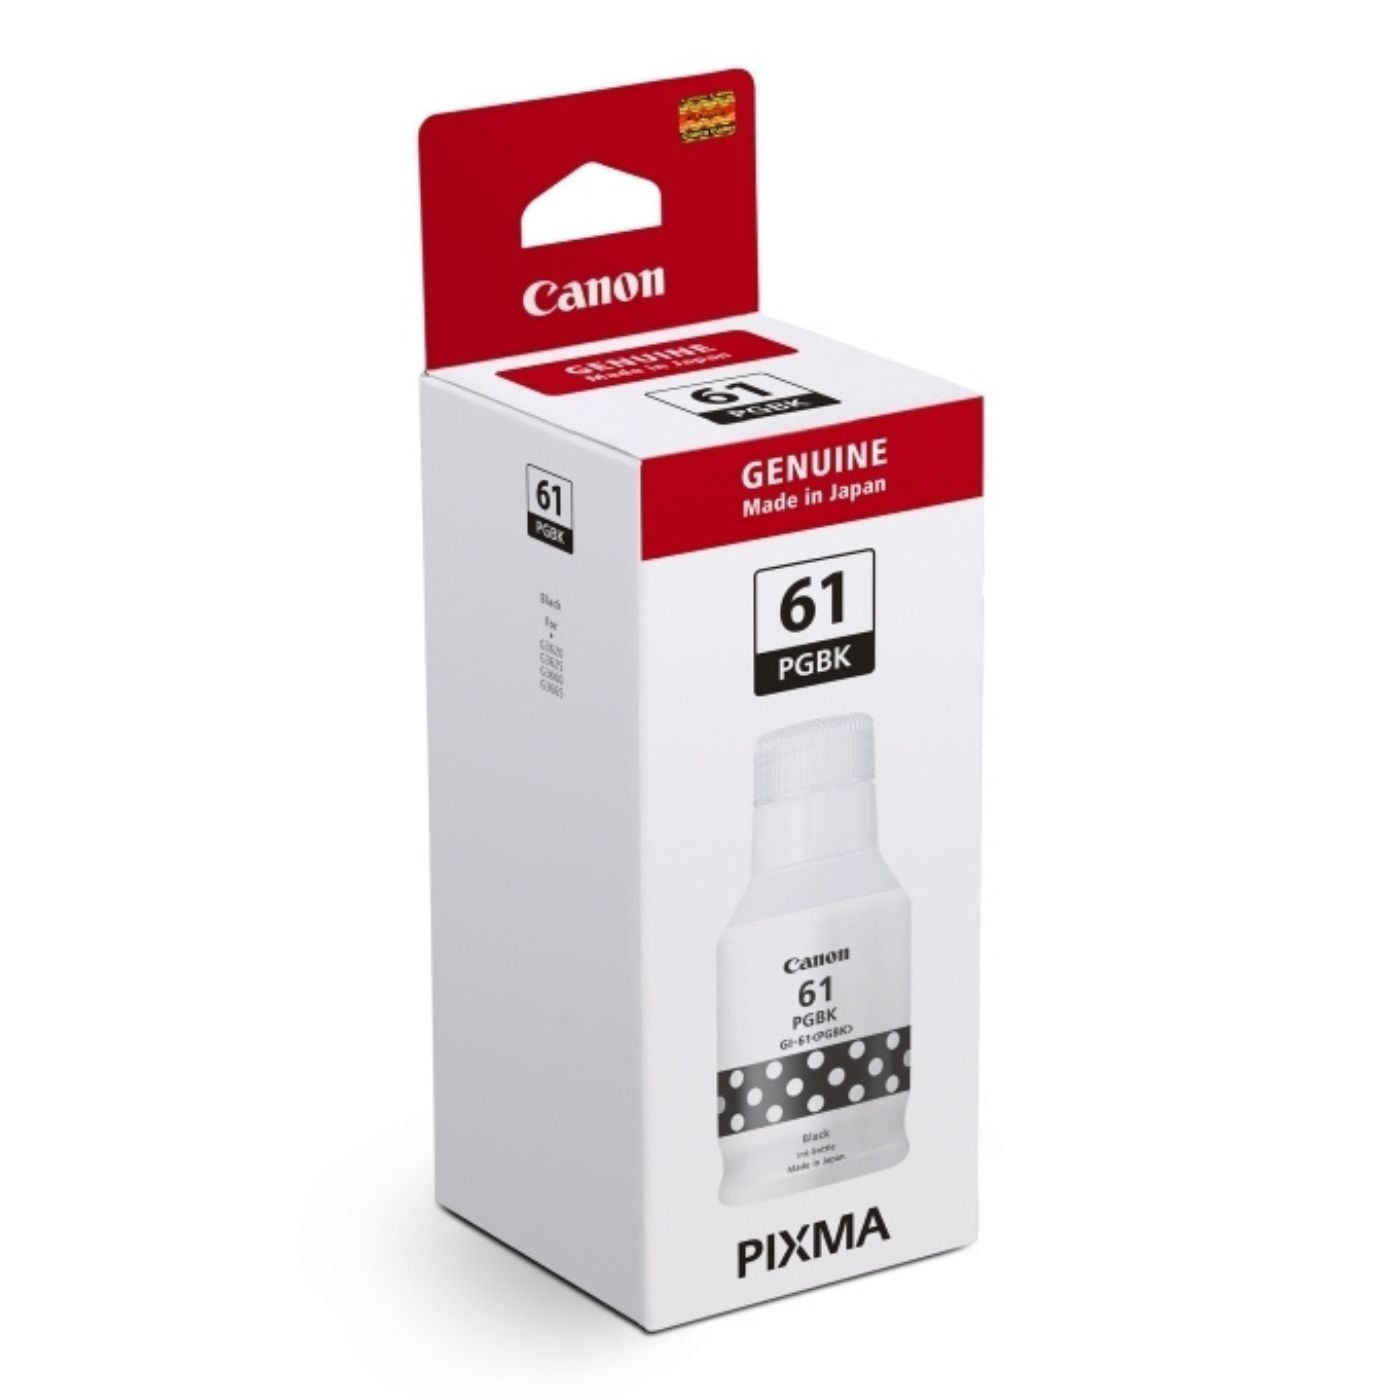 Canon PIXMA GI-61BK Mega Tank Refill Ink Bottle 135ml Black